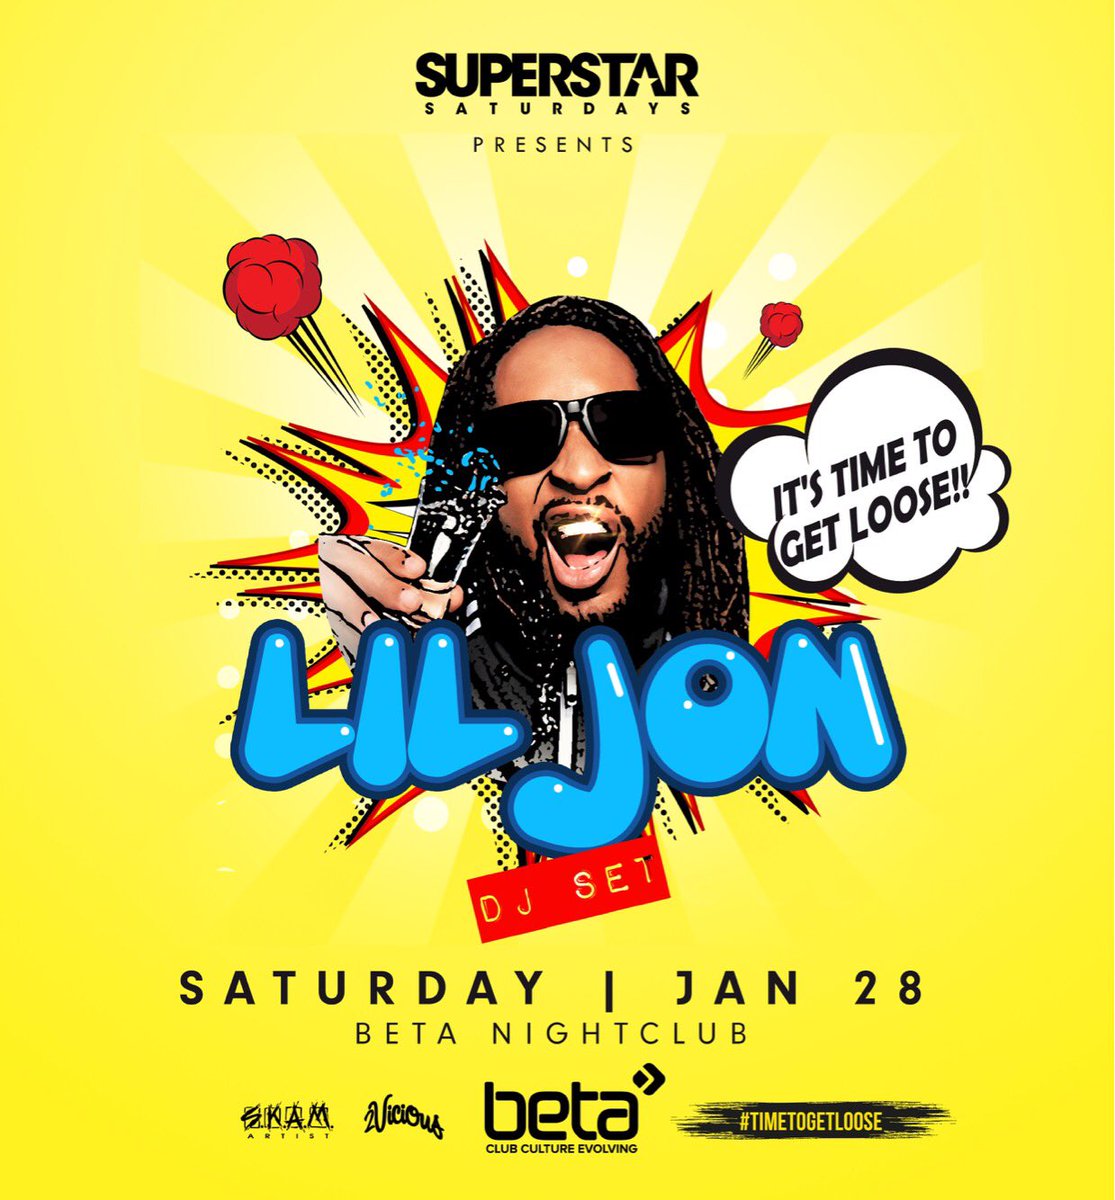 RT @BetaNightclub: The Return Of The King. @LilJon is back for a DJ set #SuperstarSaturdays 1/28! https://t.co/zEt3CadYCe